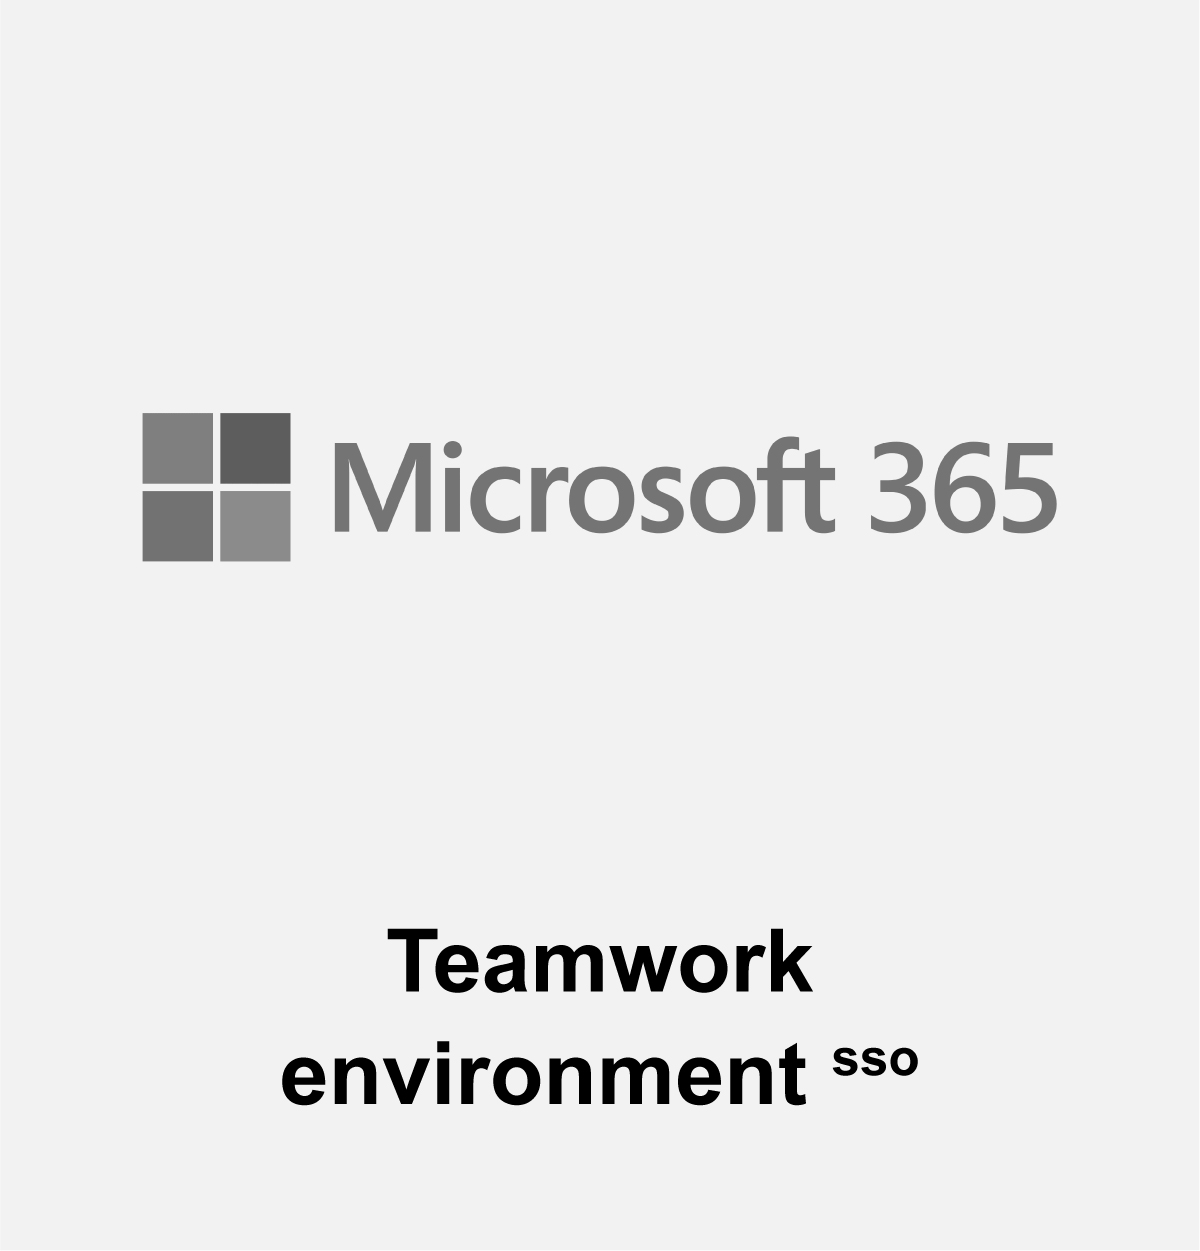 Microsoft 365 – teamwork environment